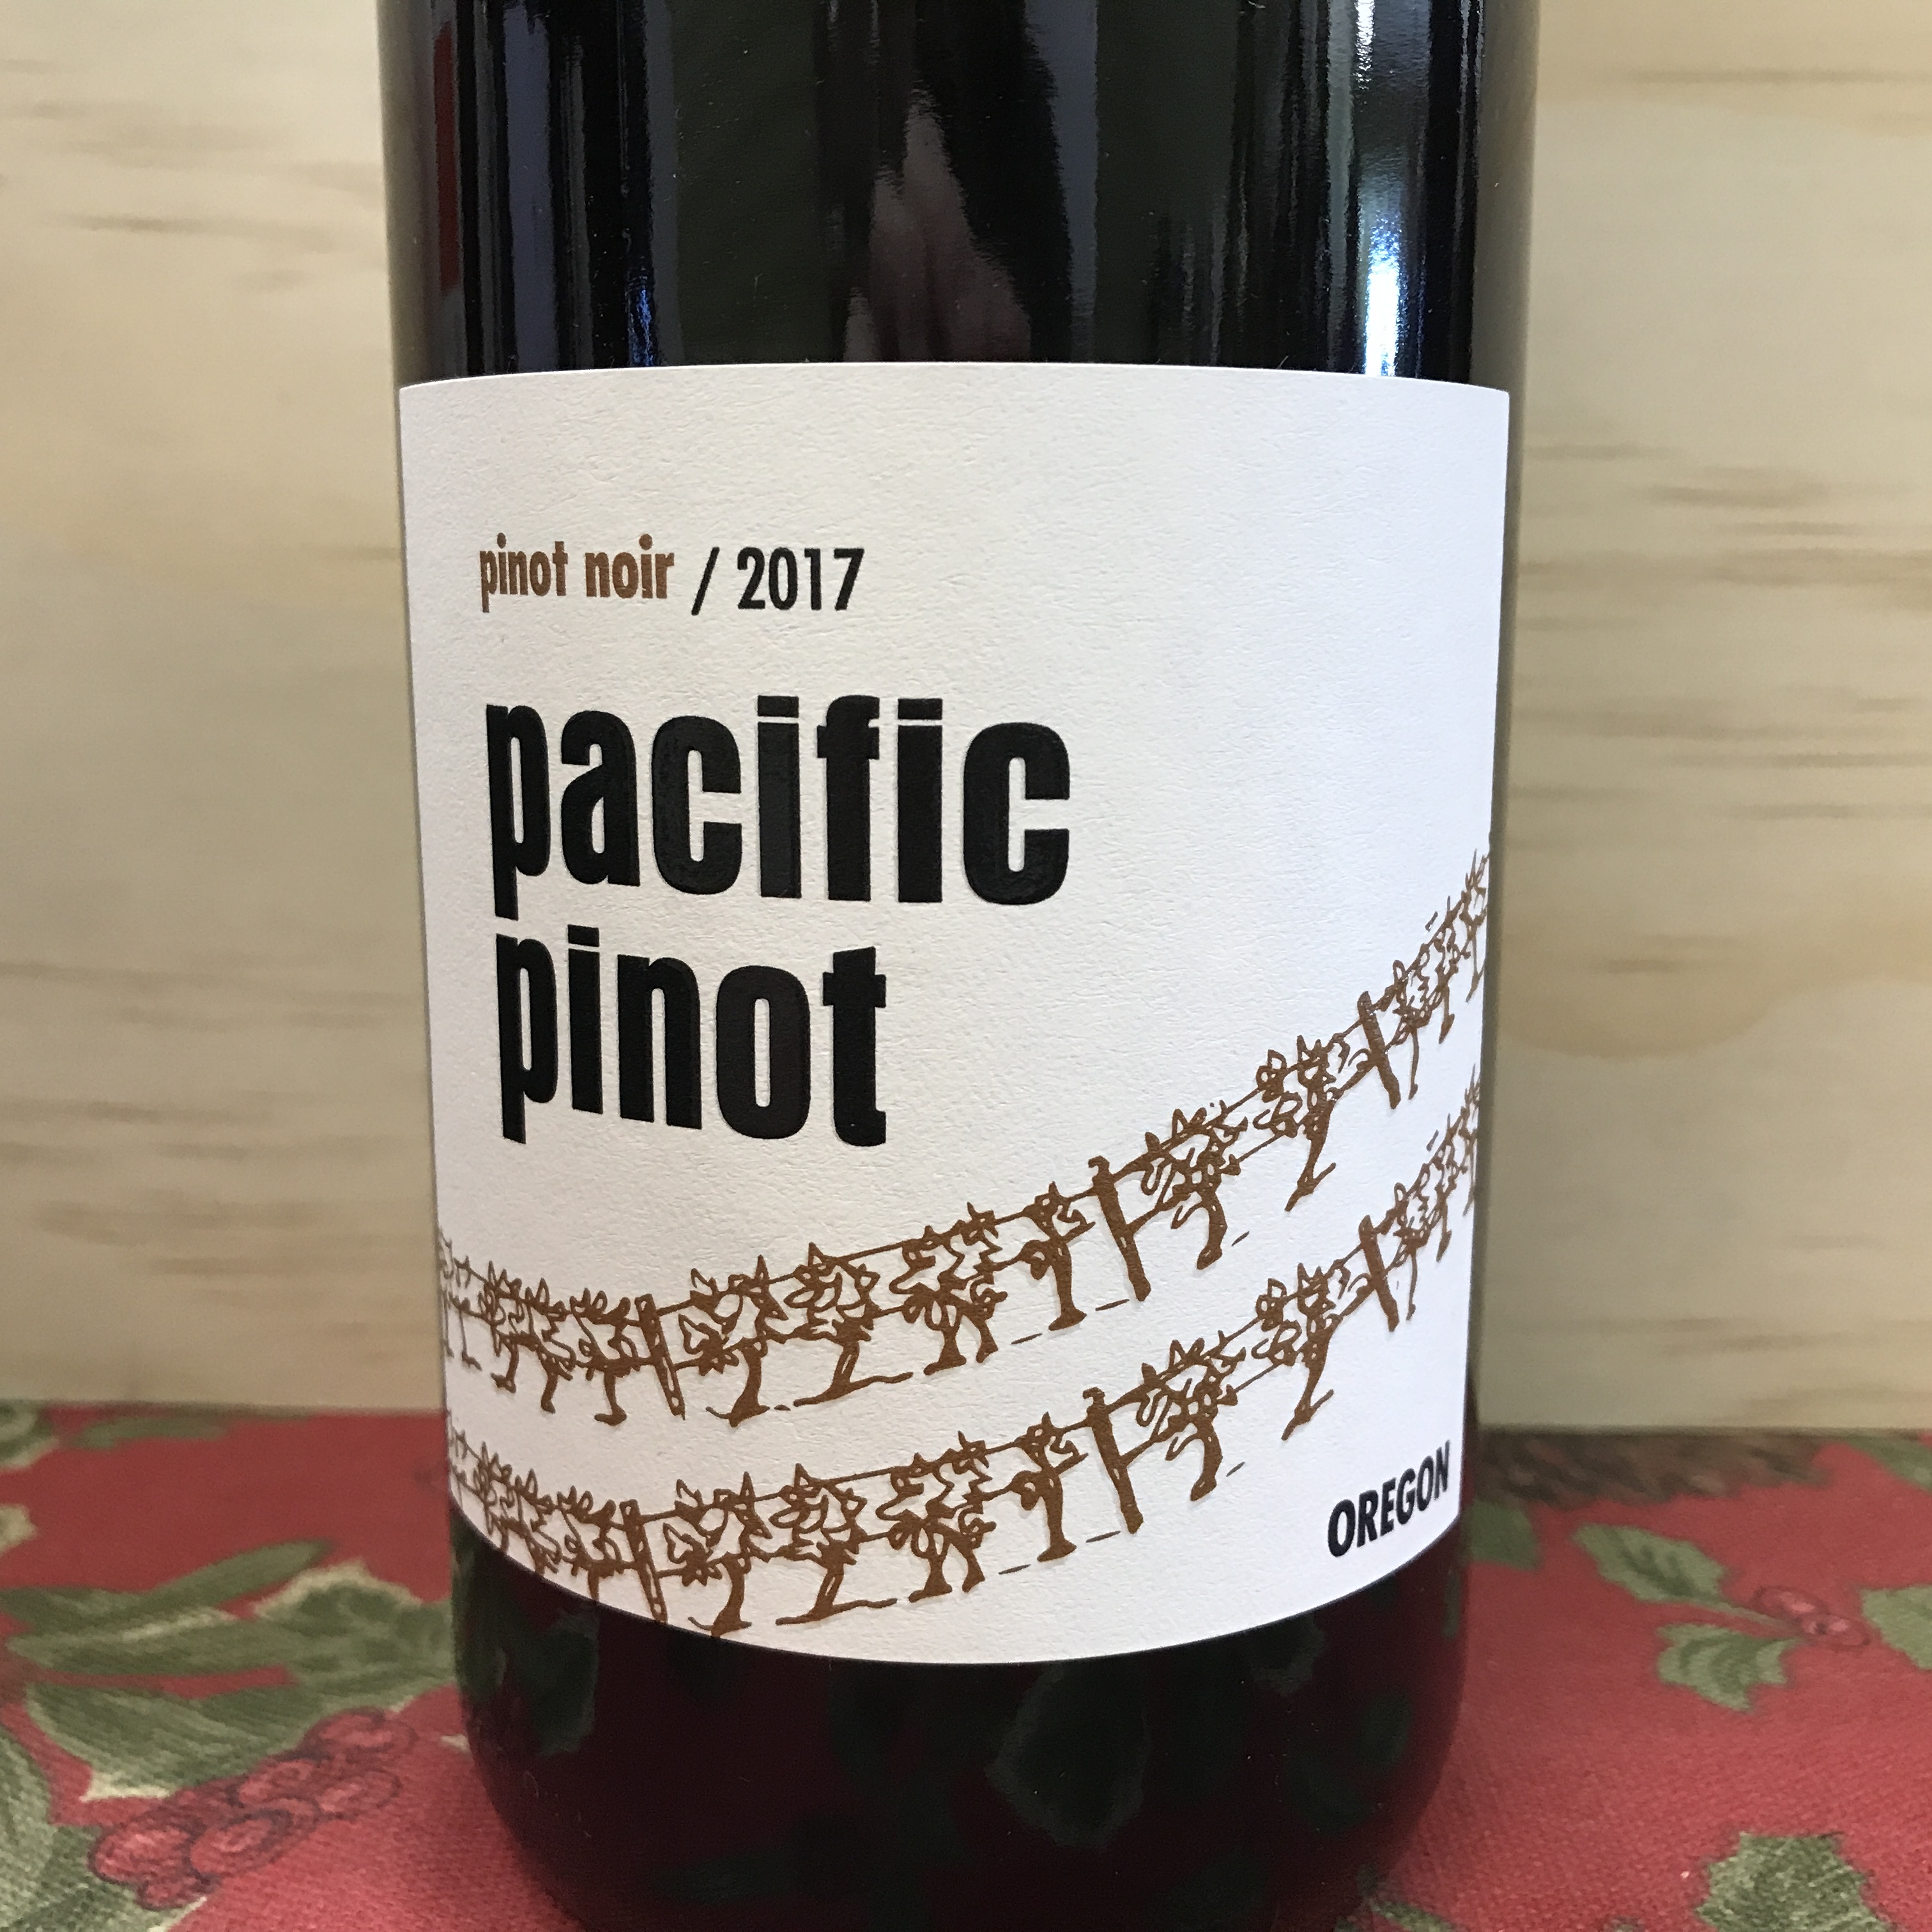 Pacific Pinot Oregon 2017